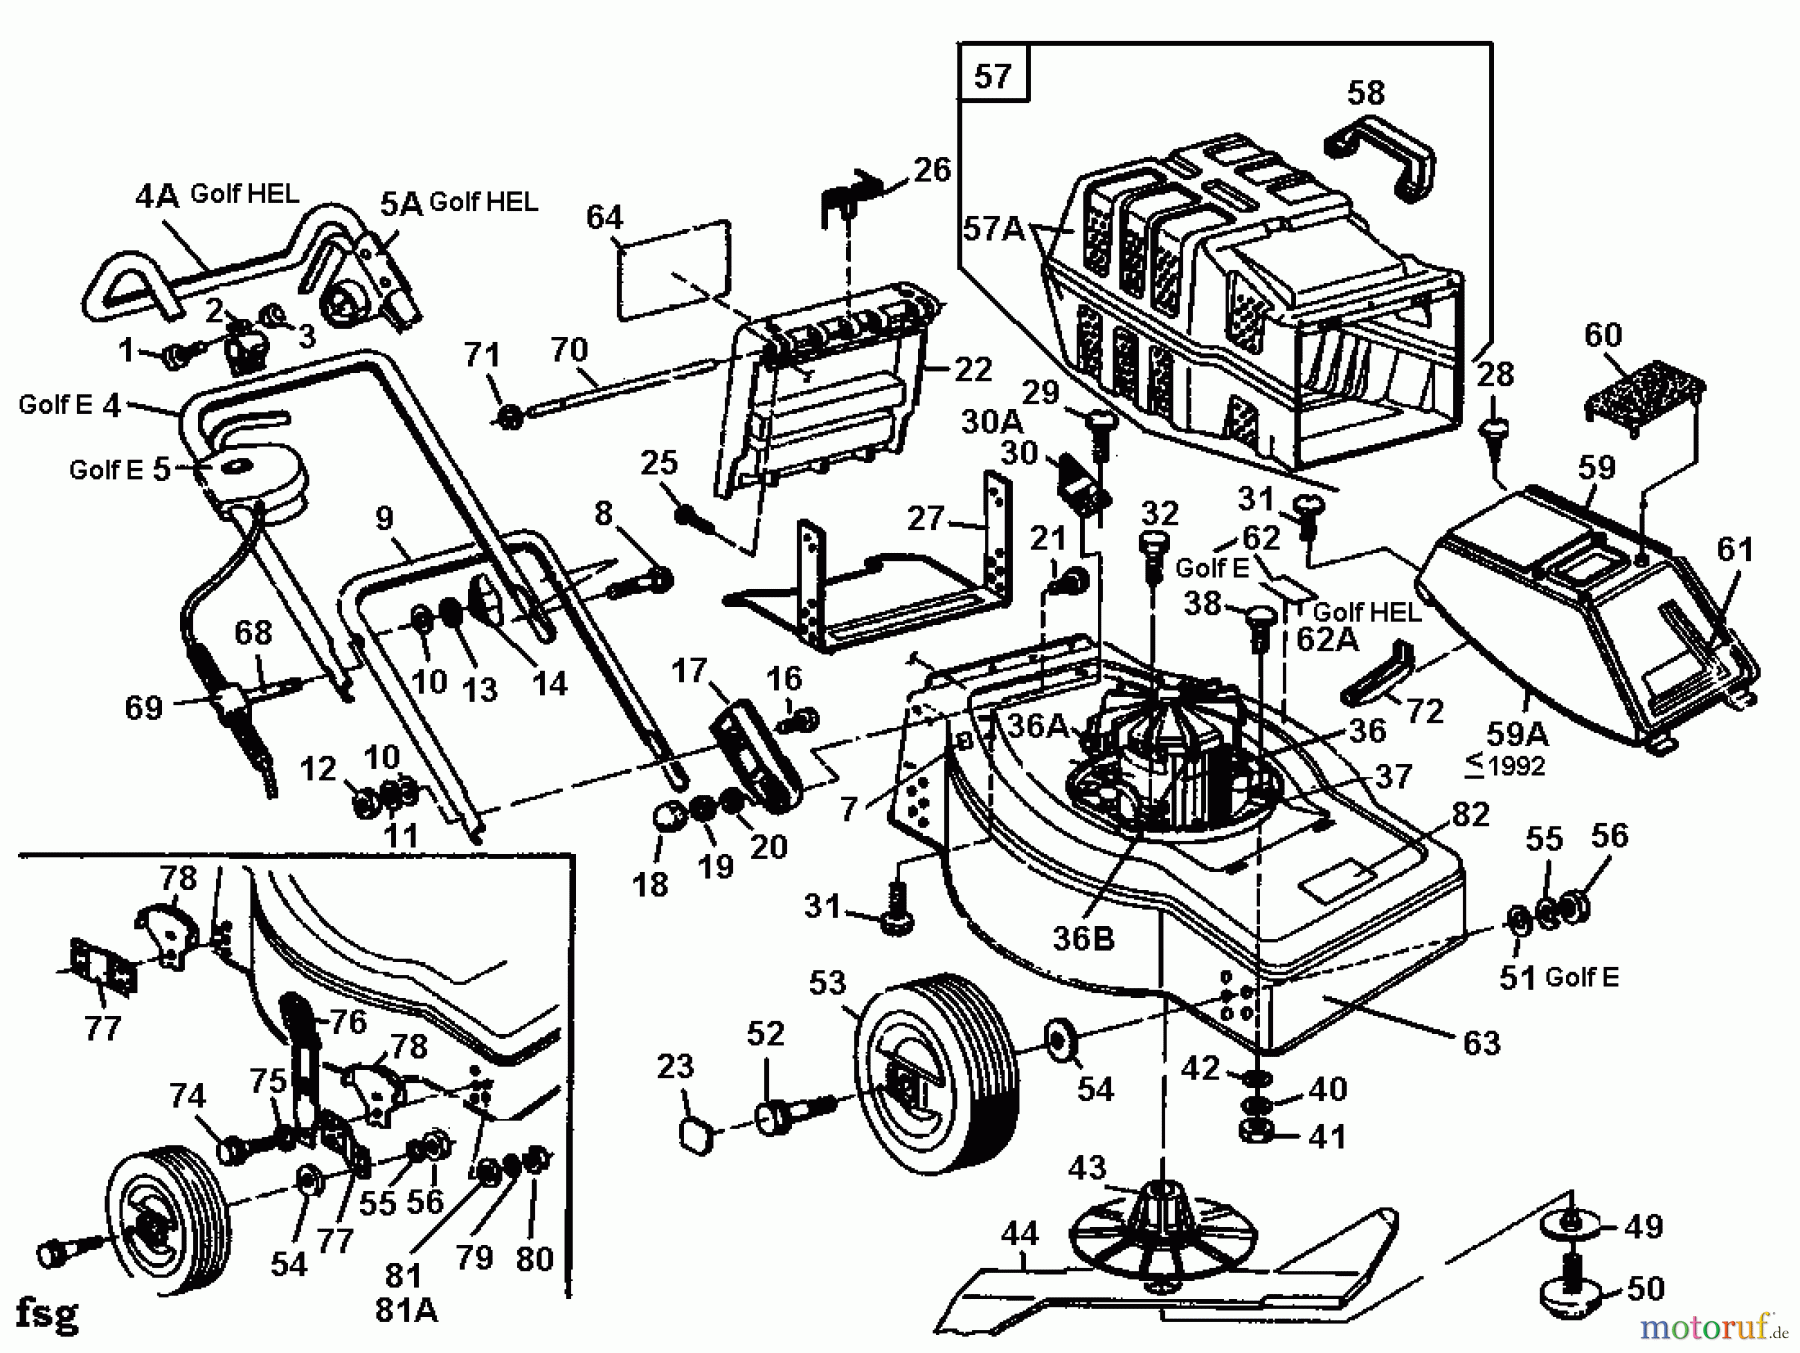  Golf Electric mower Golf HEL 02881.07  (1993) Basic machine